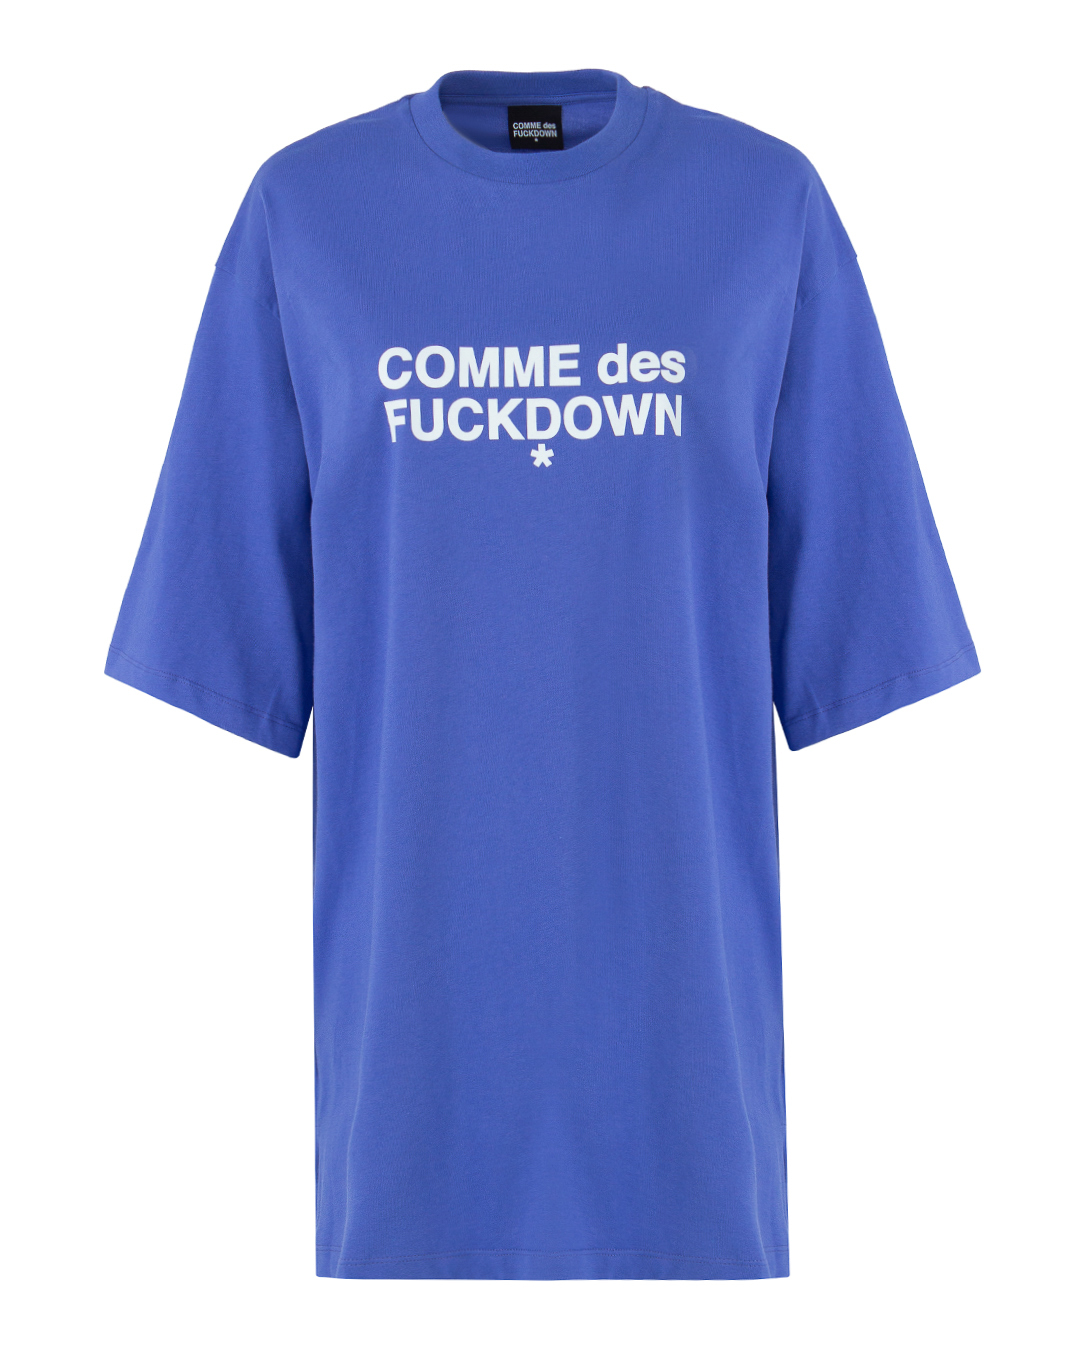 COMME des FUCKDOWN с логотипом бренда  артикул  марки COMME des FUCKDOWN купить за 12800 руб.